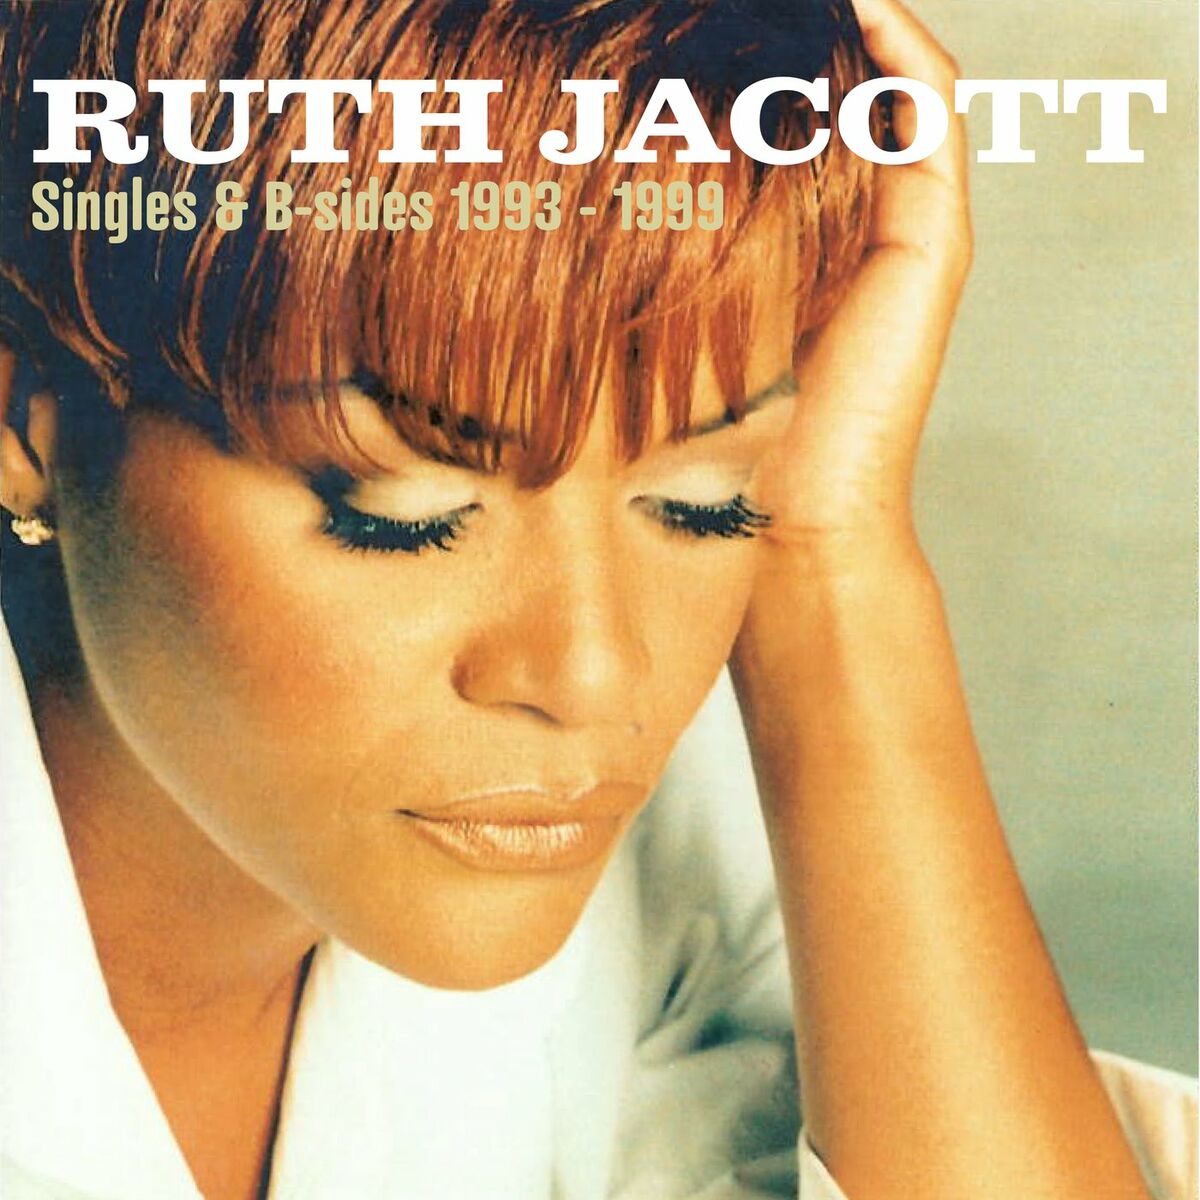 Ruth Jacott - Singles & B-sides 1993 - 1999 (2022)